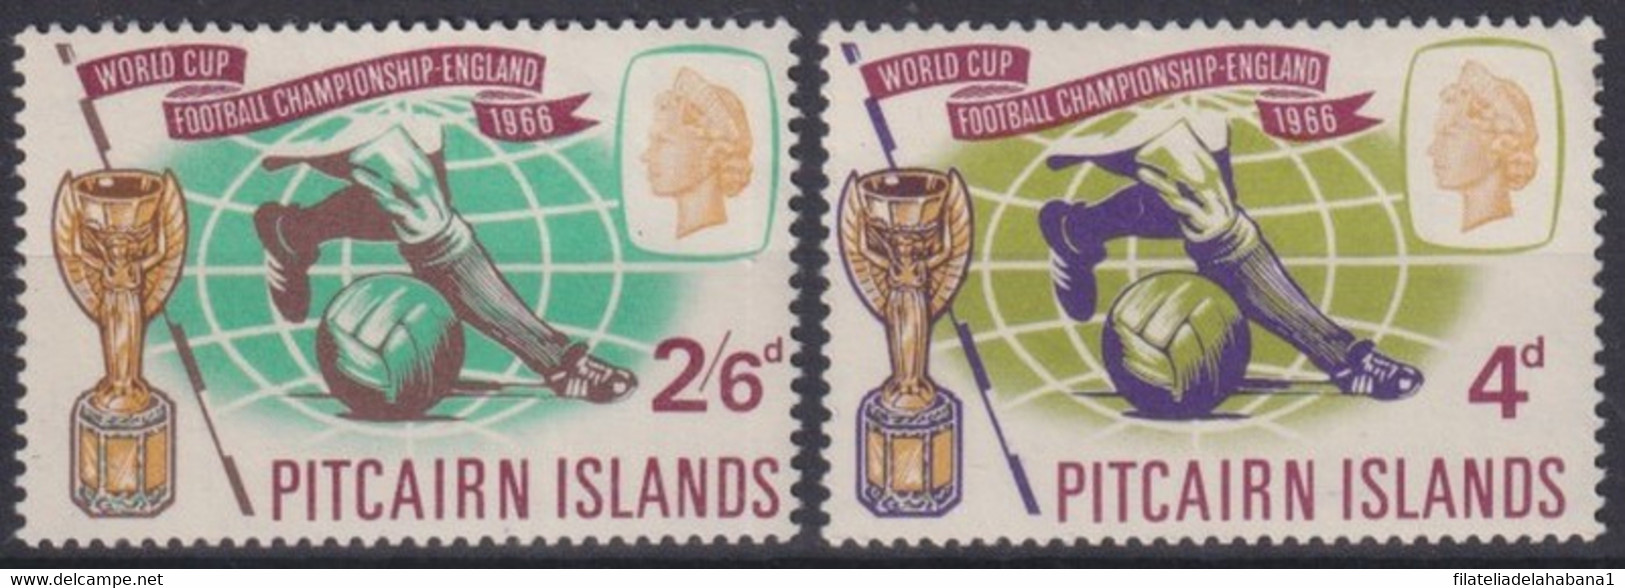 F-EX36472 PITCAIRN 1966 MNH WORLD CHAMPIONSHIP SOCCER CUP FOOTBALL. - 1966 – Angleterre